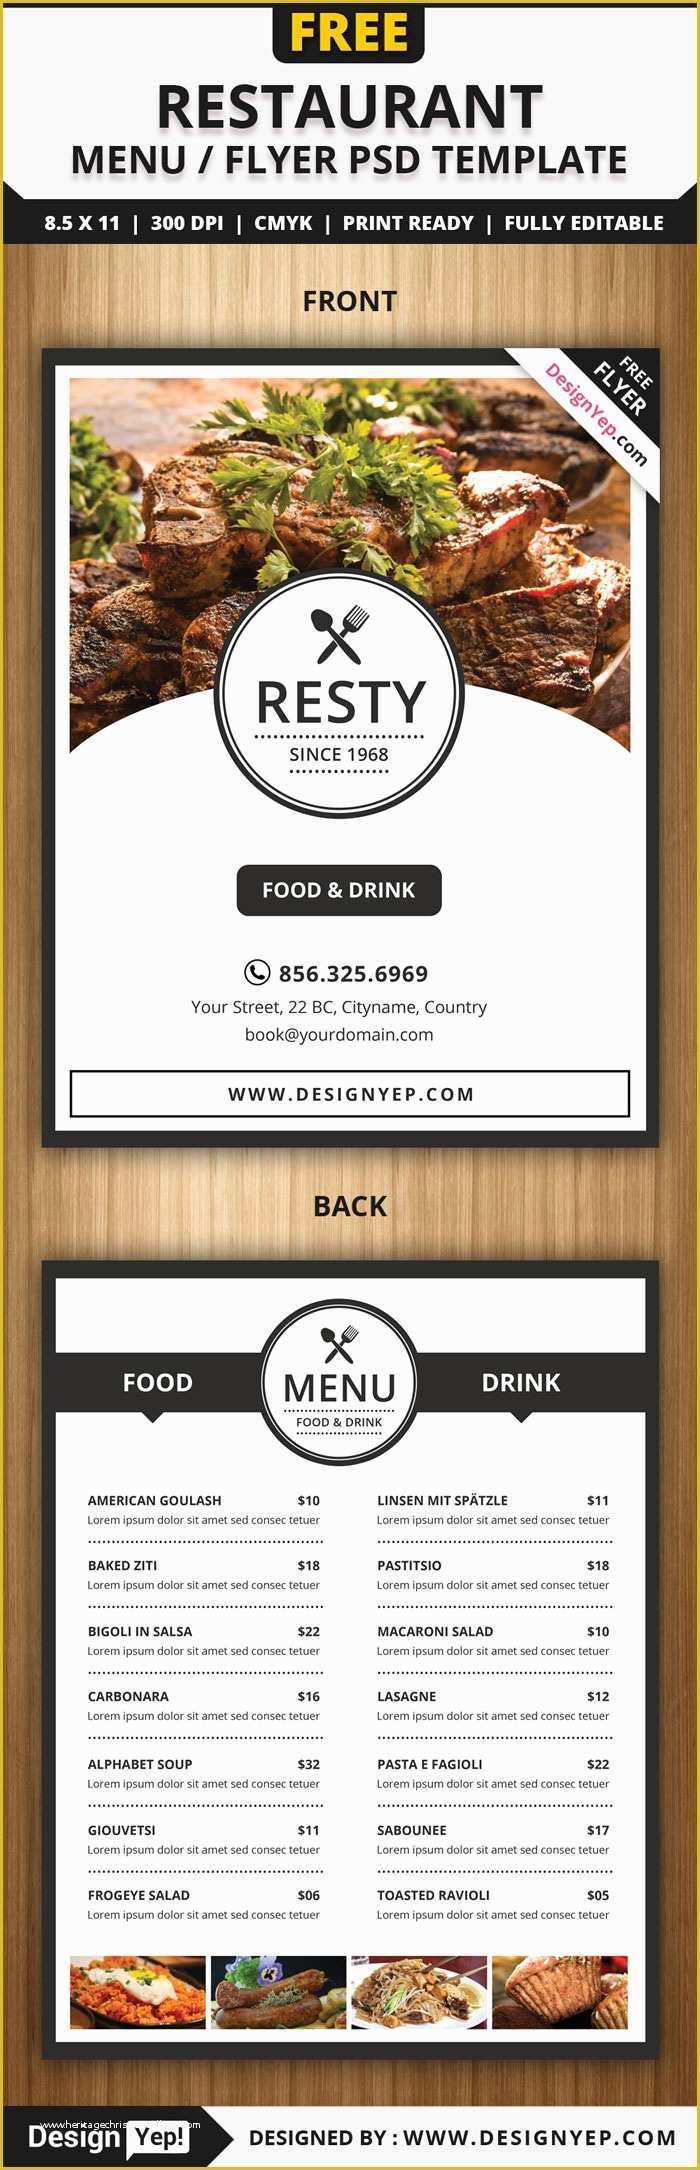 Menu Poster Template Free Of 30 Free Restaurant and Food Menu Flyer Templates Designyep